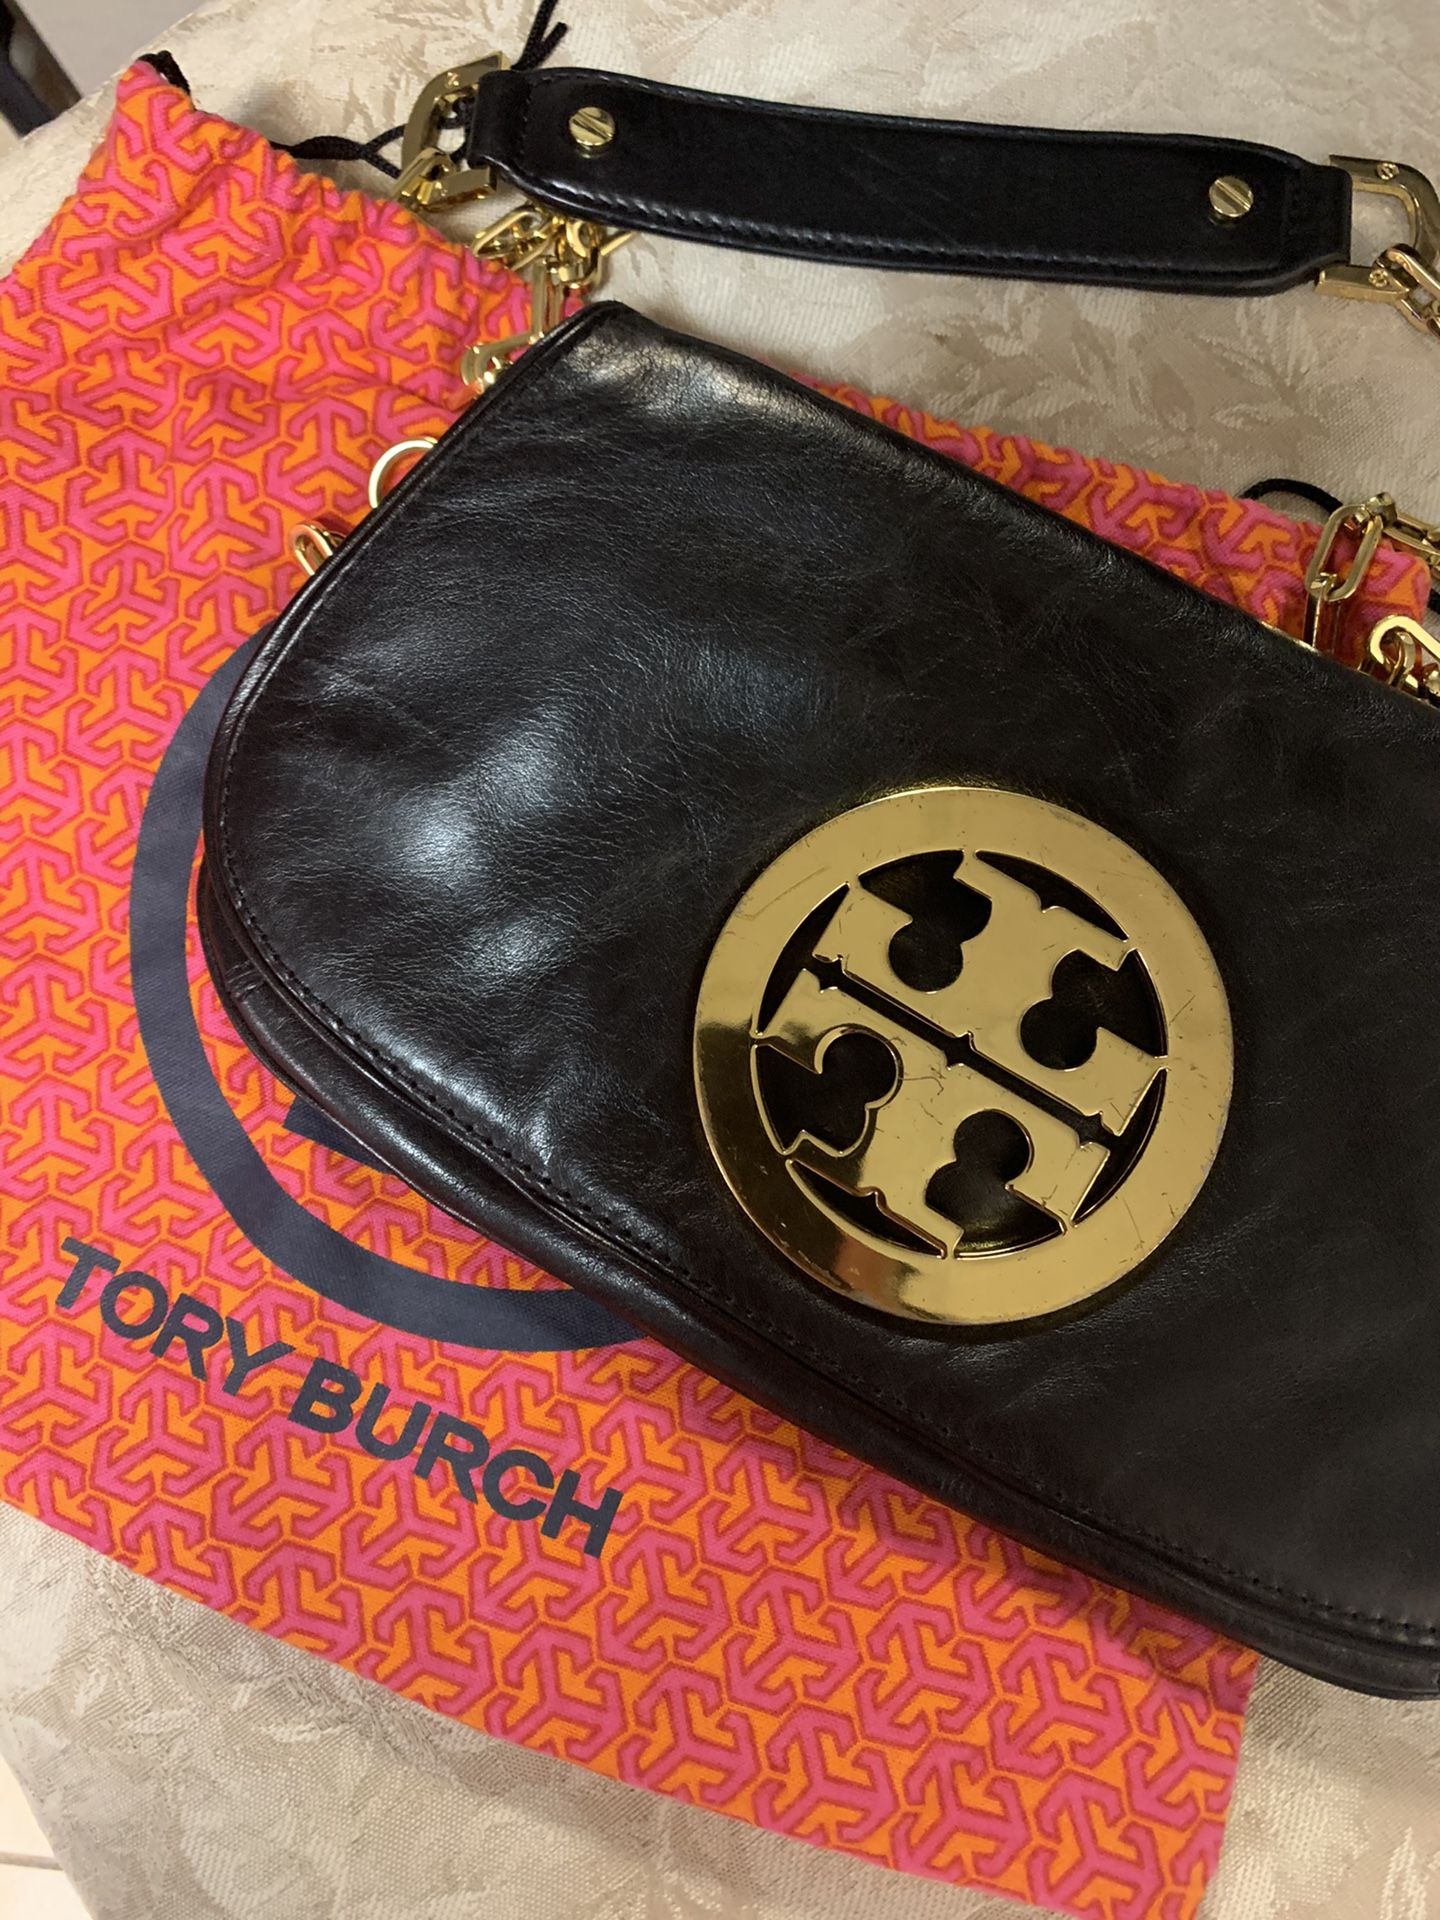 Tory Burch purse